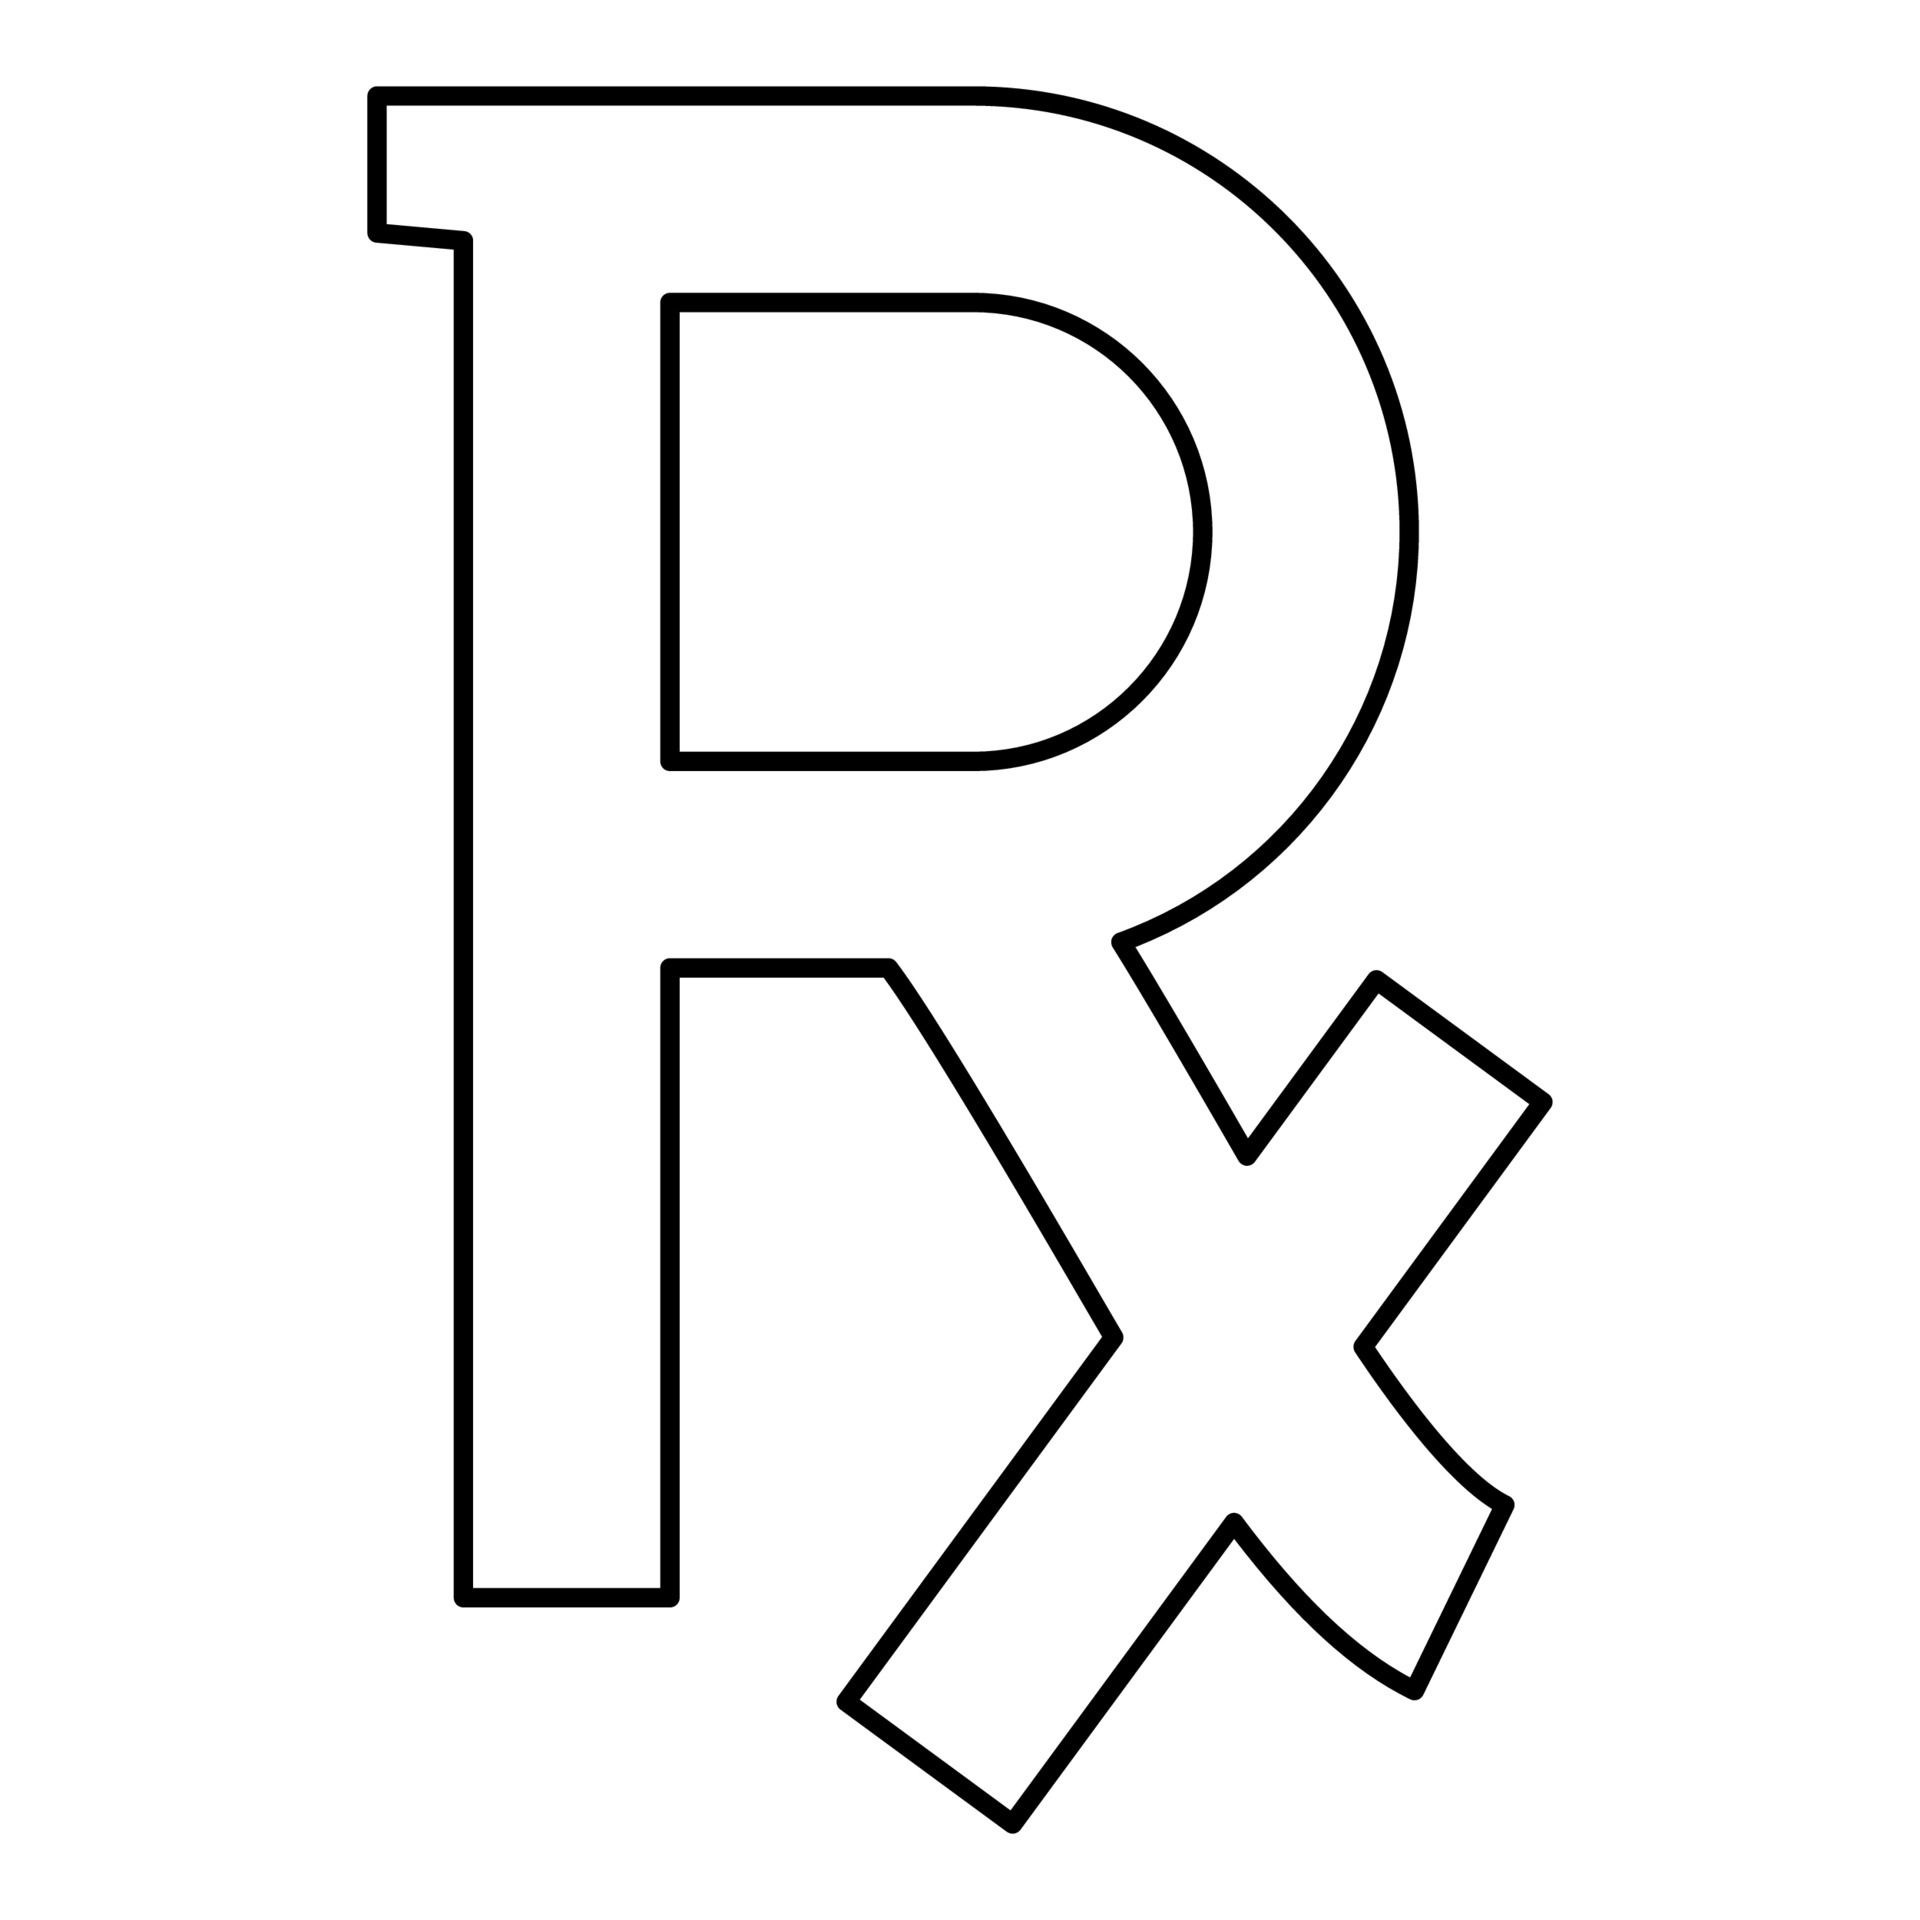 Rx symbol prescription icon black color illustration flat style simple  image 5199435 Vector Art at Vecteezy